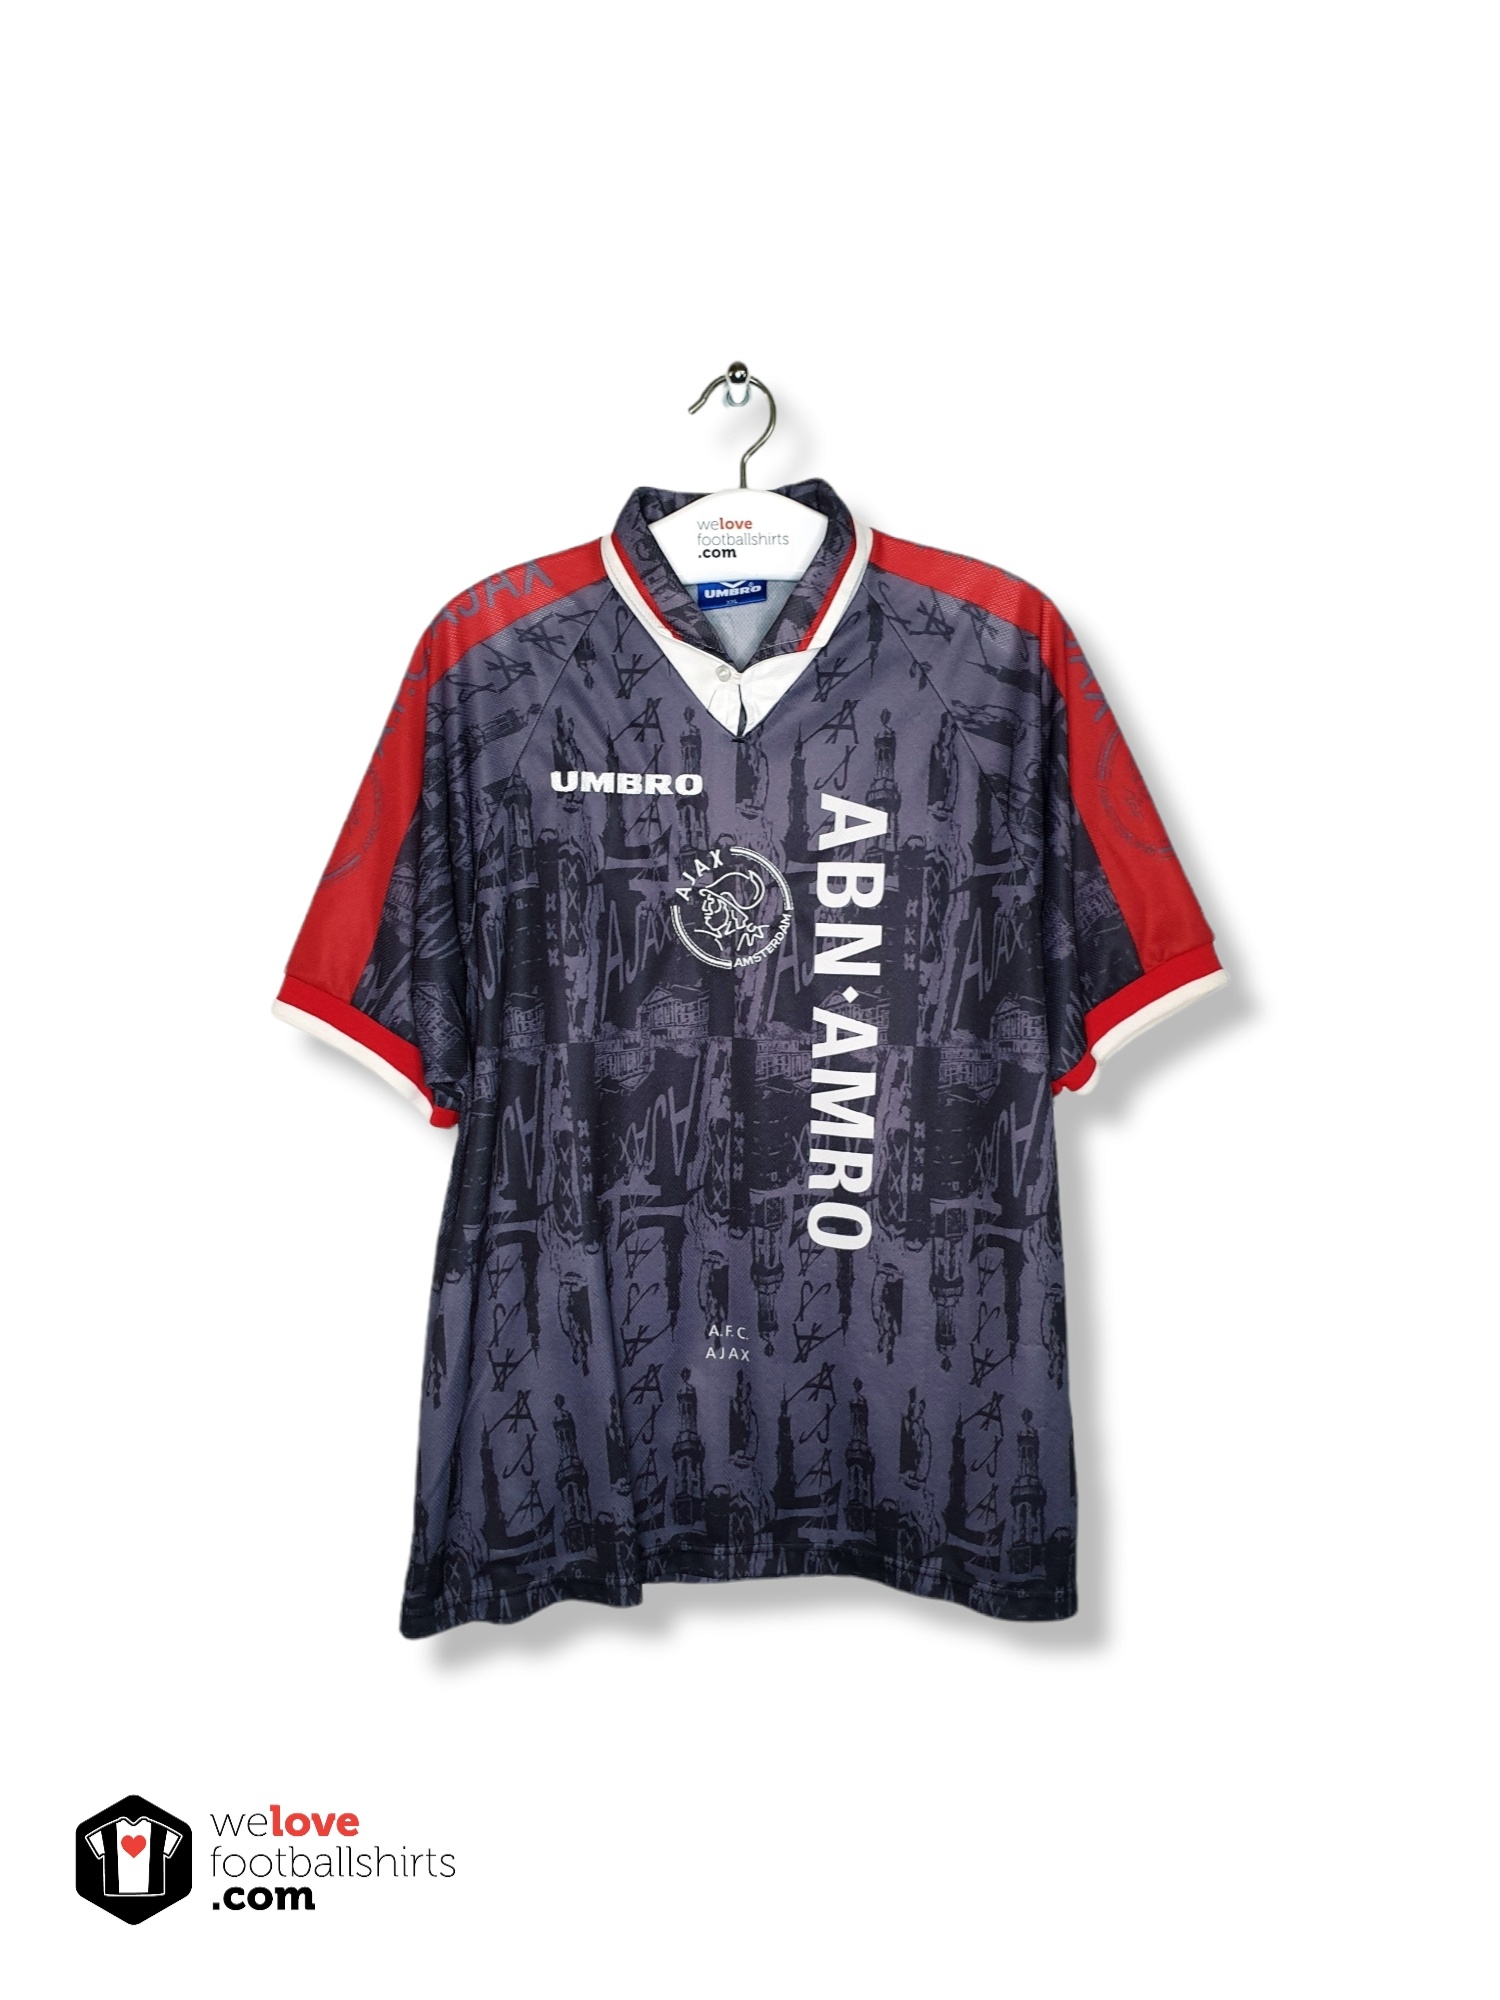 Umbro football shirt AFC Ajax 1996/97